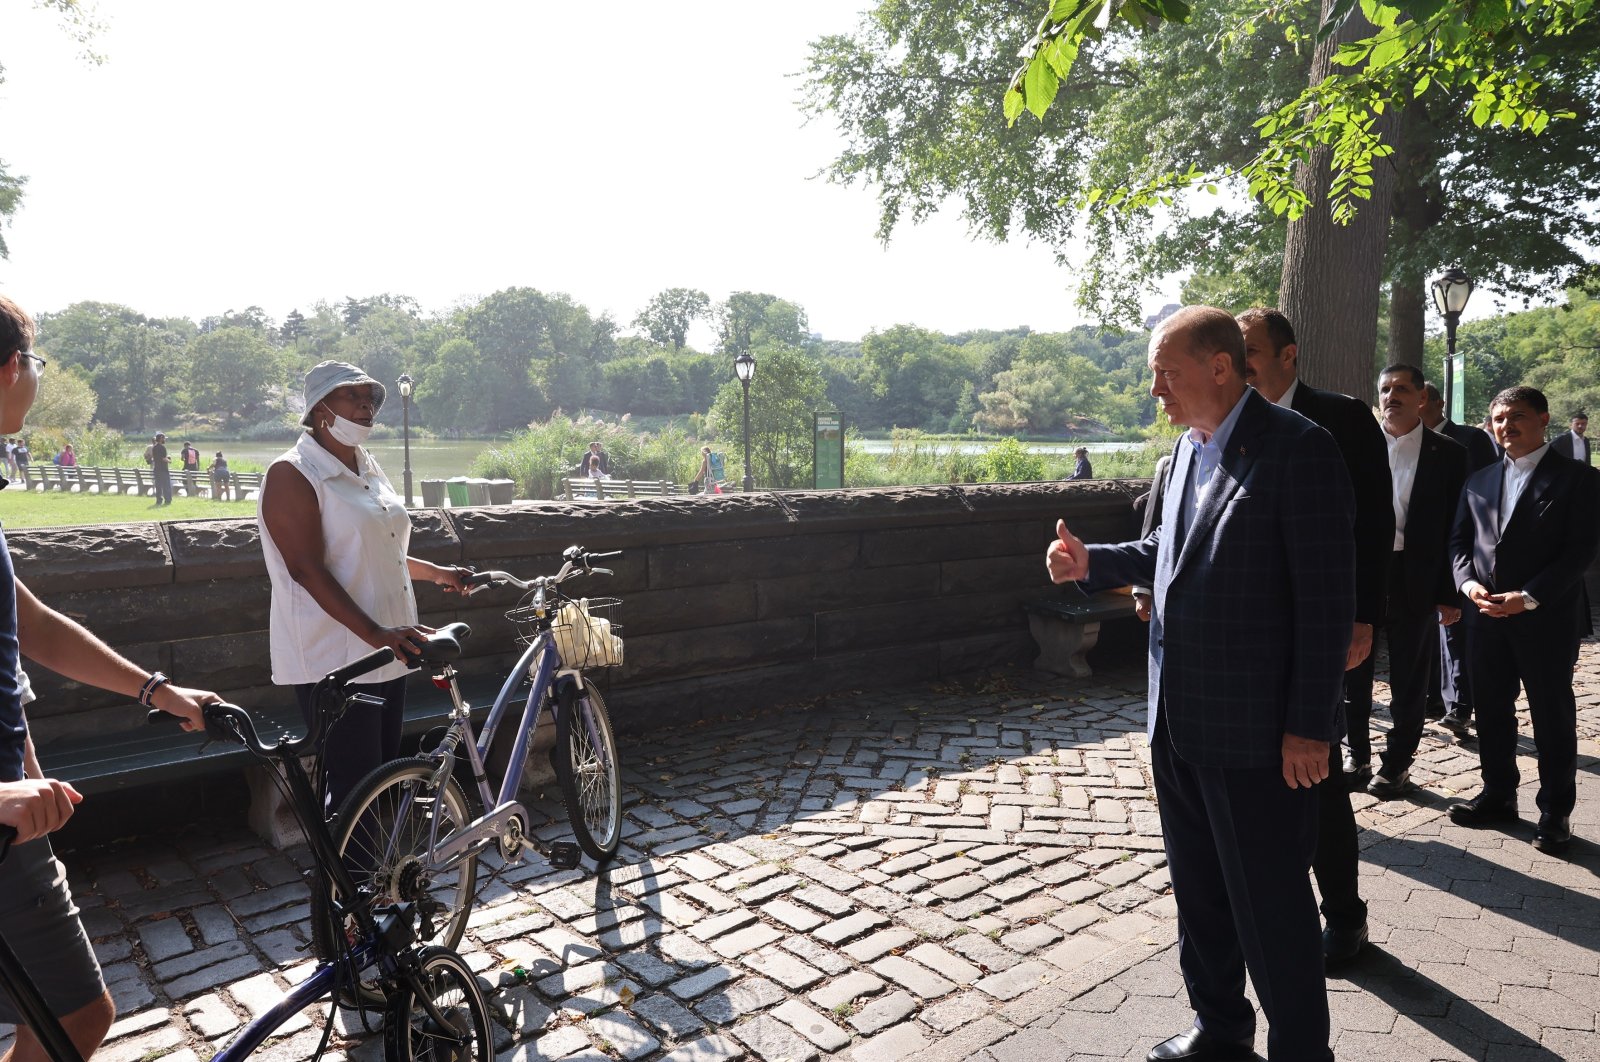 President Recep Tayyip Erdoğan (R) talks with people in Central Park, New York, U.S., Sept. 17, 2022. (IHA Photo)